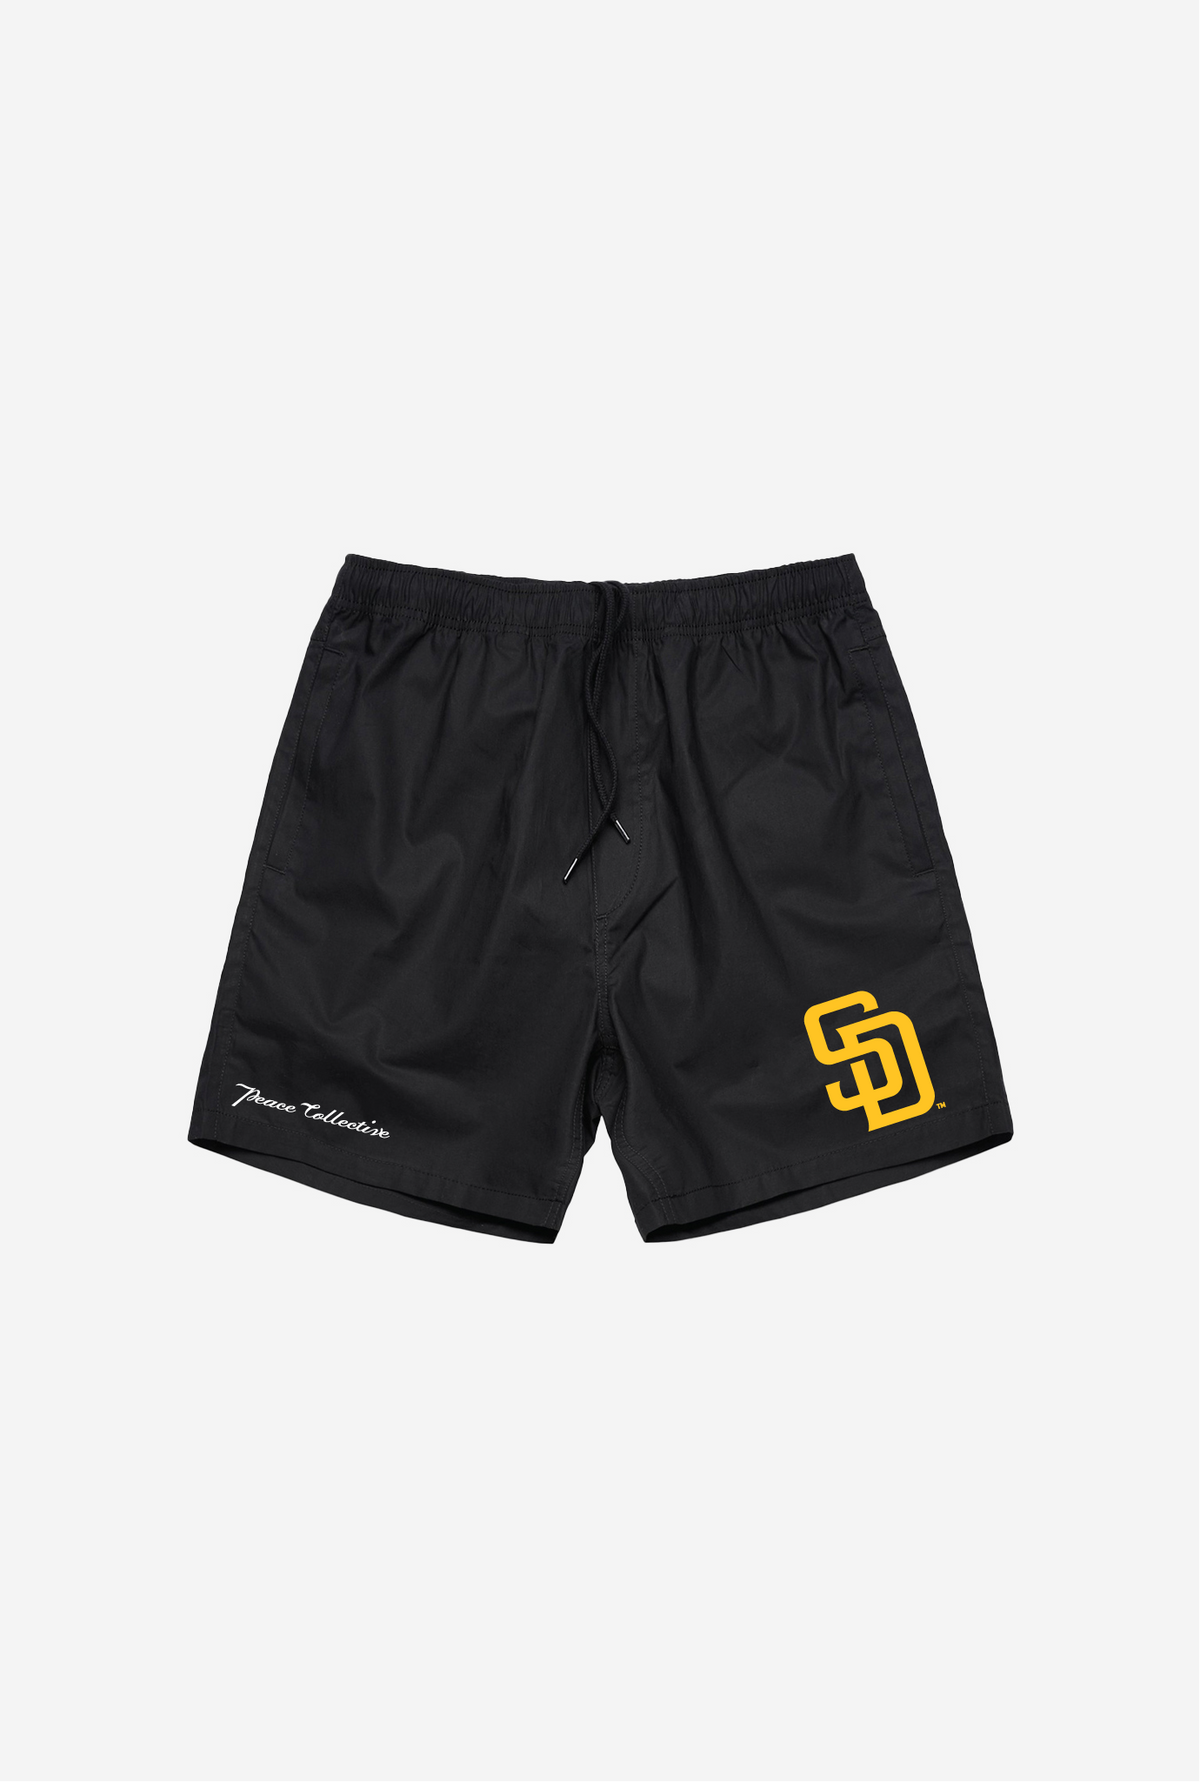 San Diego Padres Shorts - Black